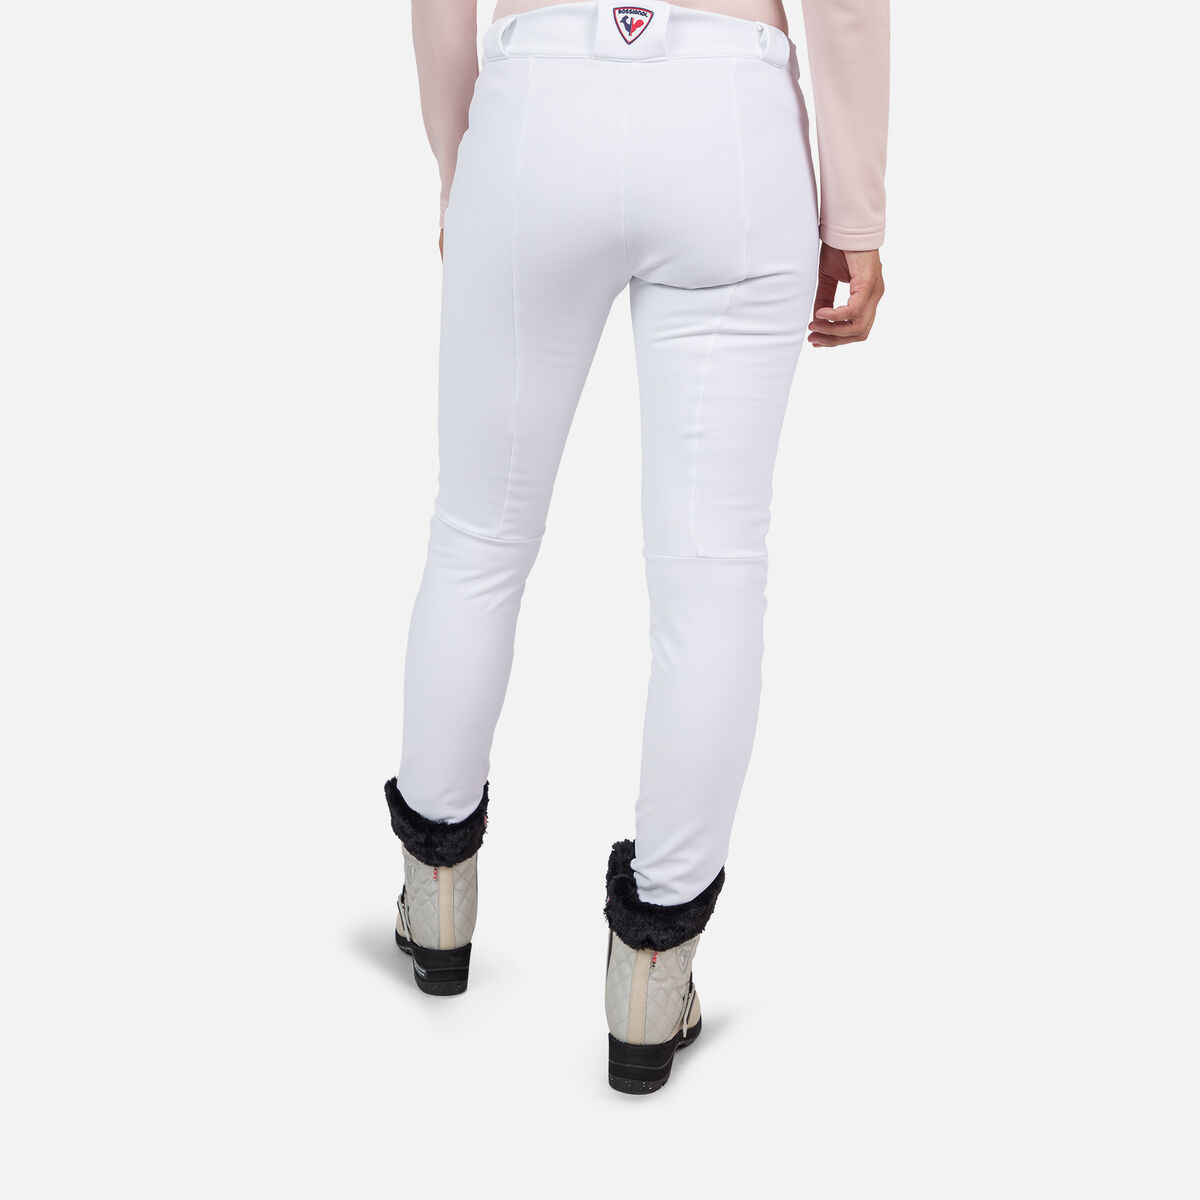 Rossignol Women's Ski Fuseau Pants White